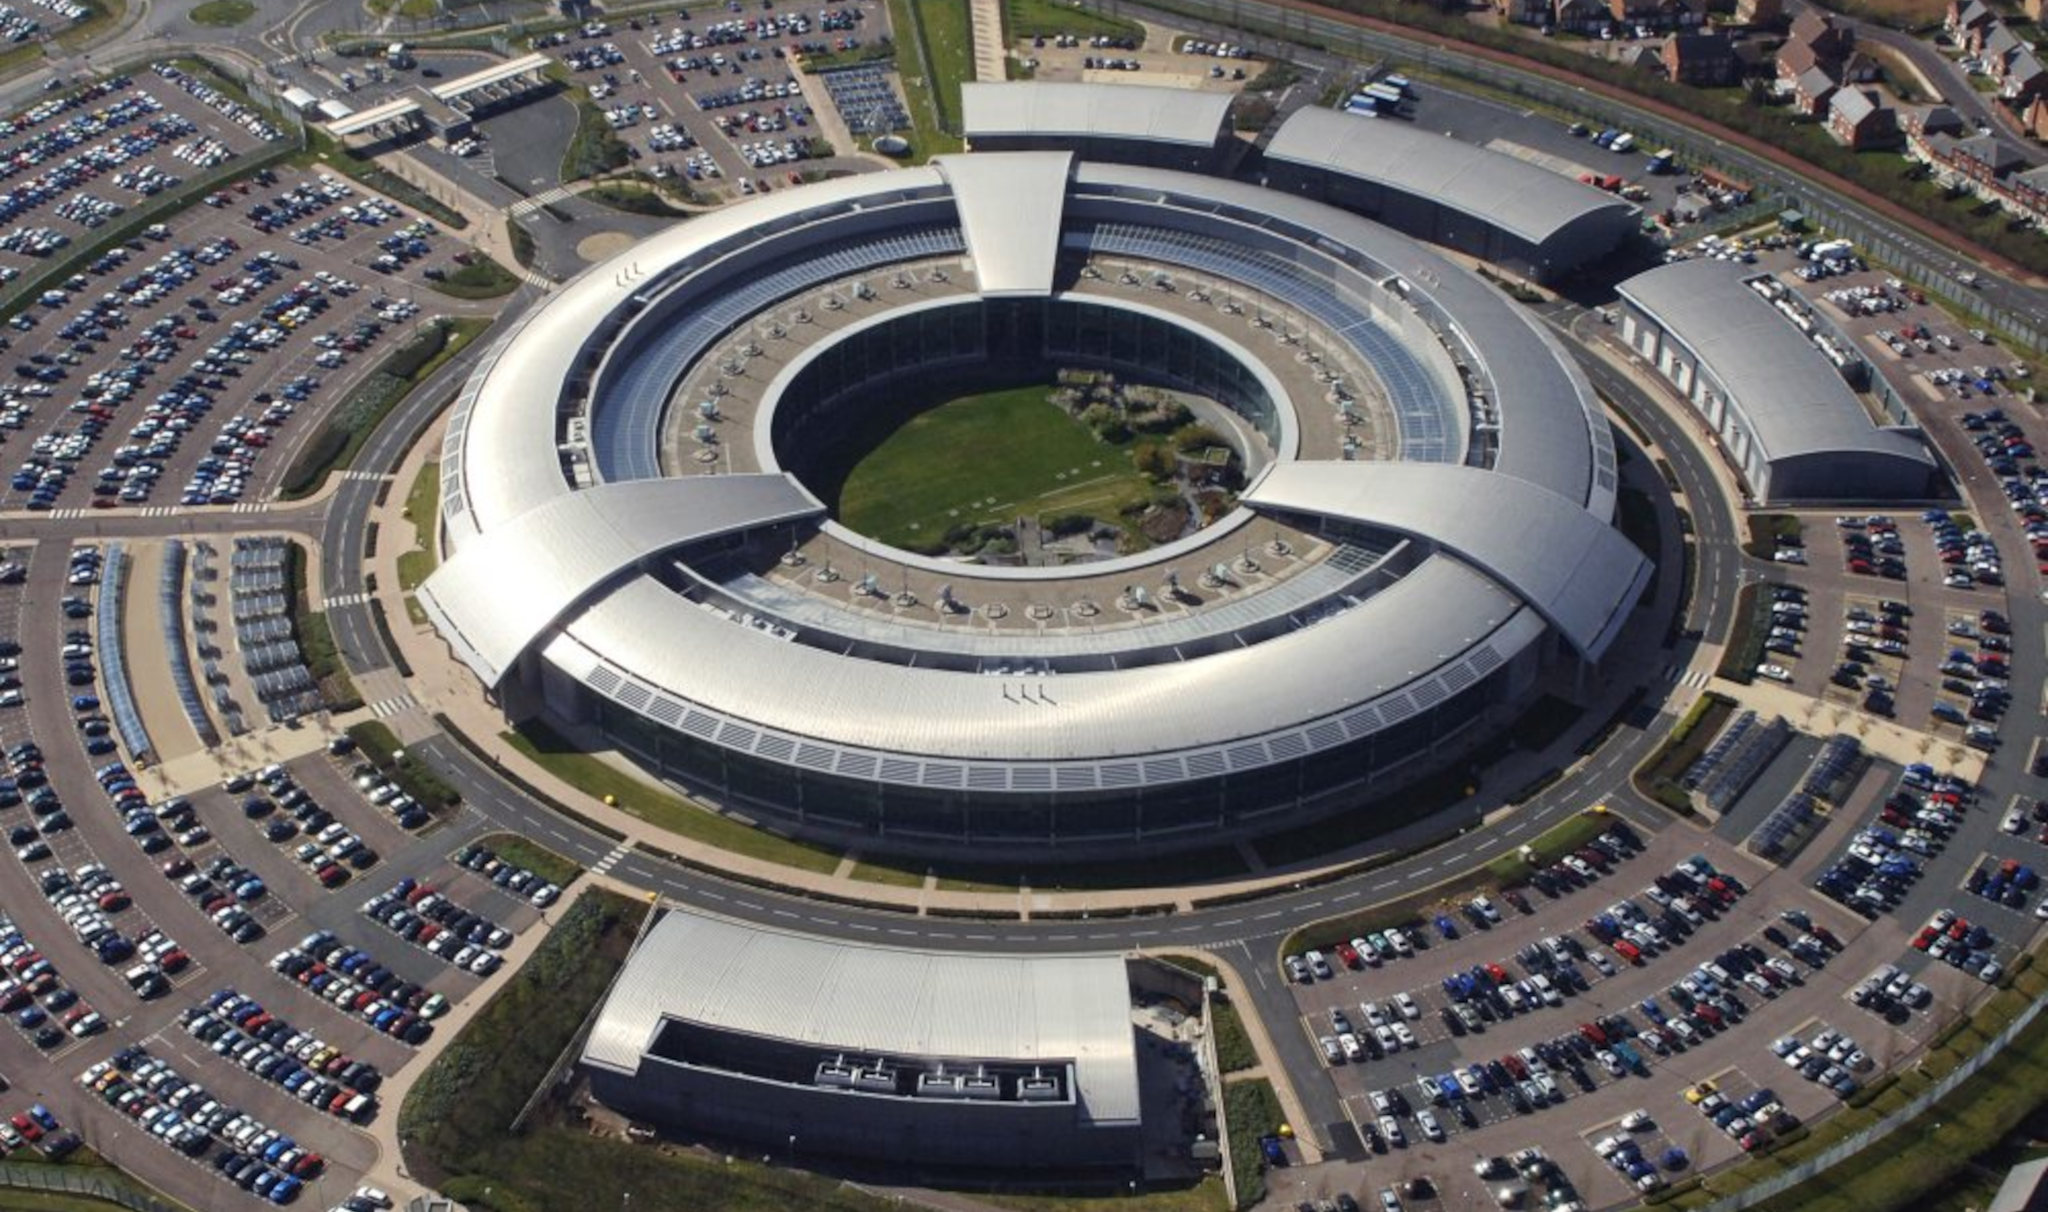 GCHQ is based in Cheltenham. (Photo: Handout / MoD)